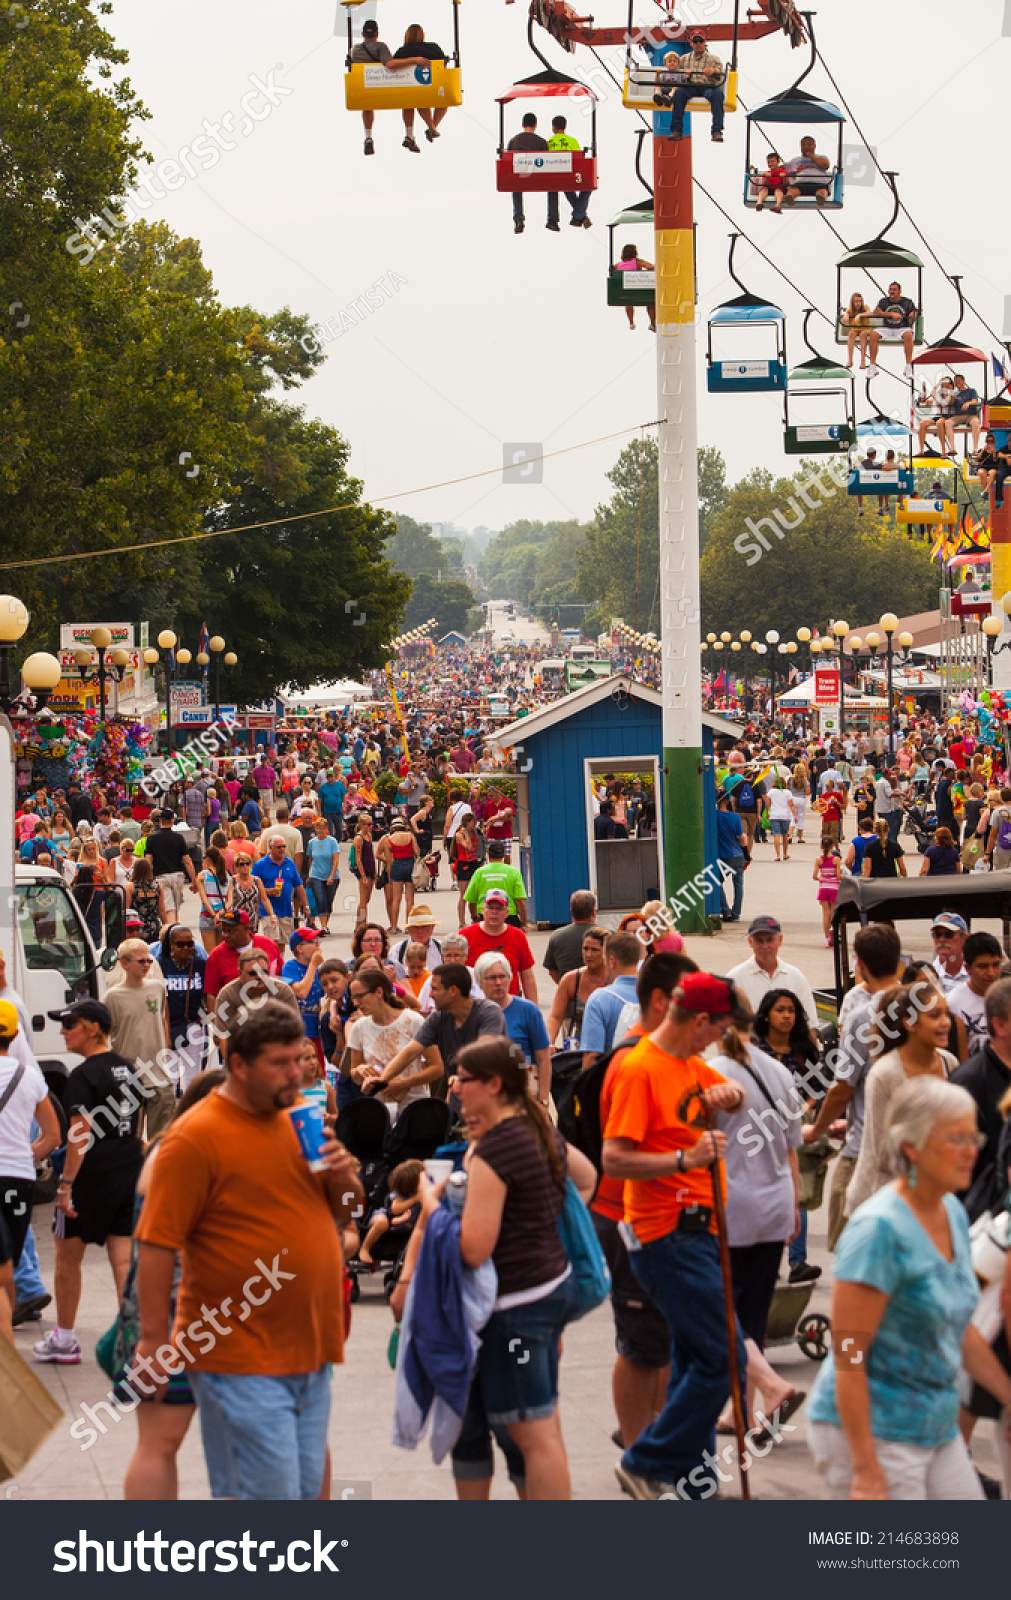 61 Iowa state fairgrounds Images, Stock Photos & Vectors Shutterstock